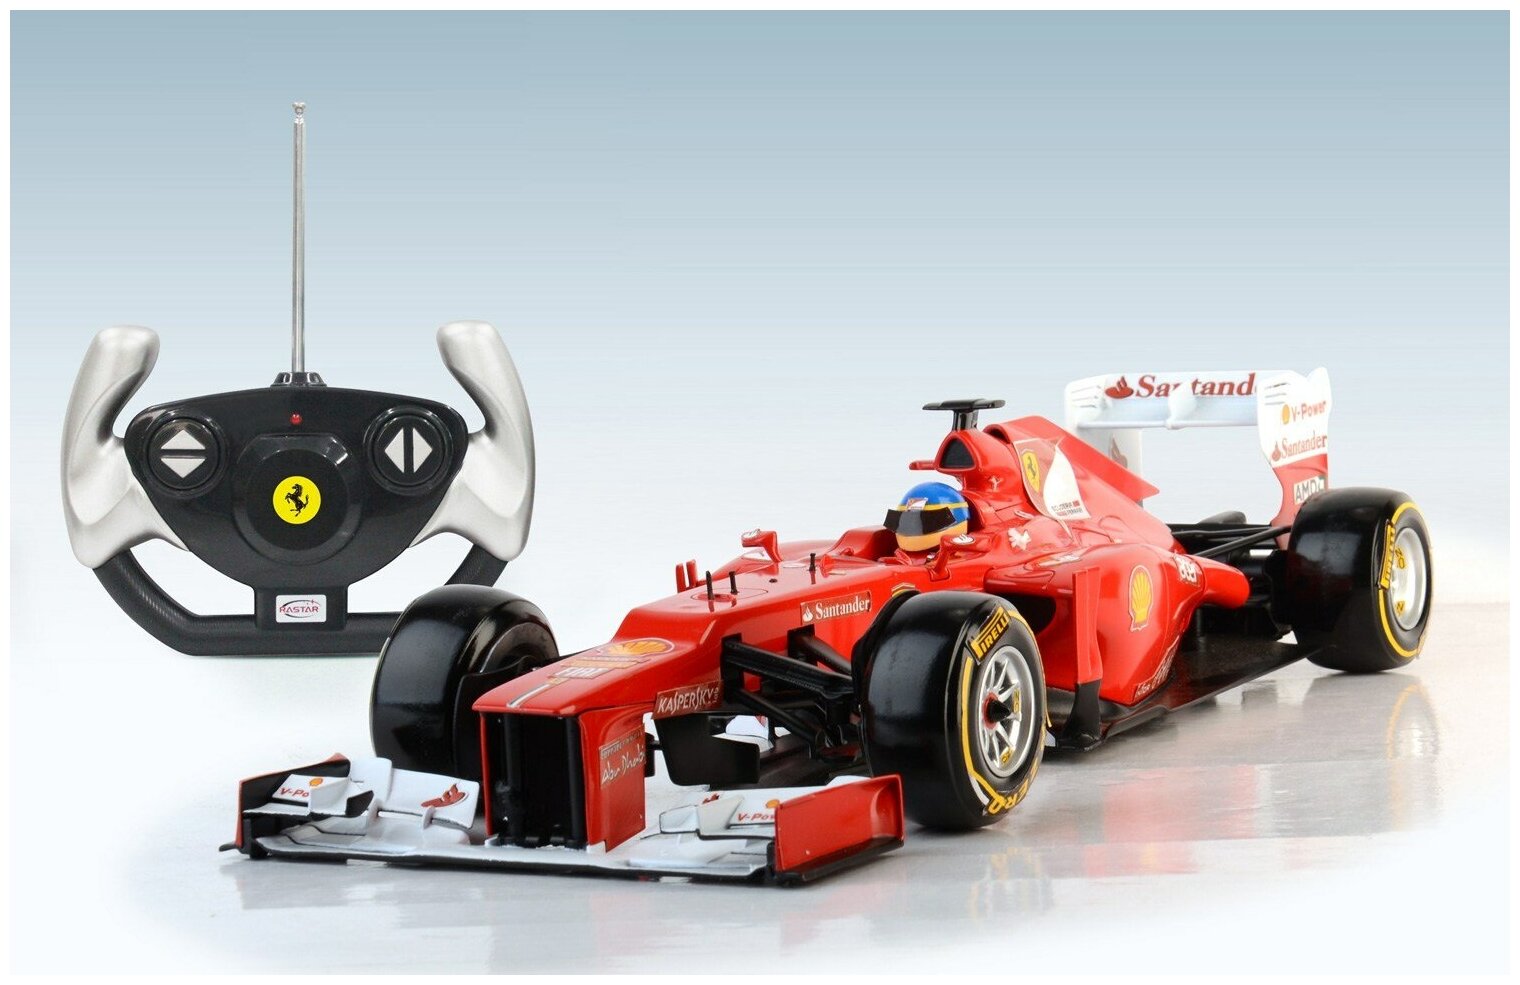 Гоночная машина Rastar Ferrari F1 57400 1:12 42